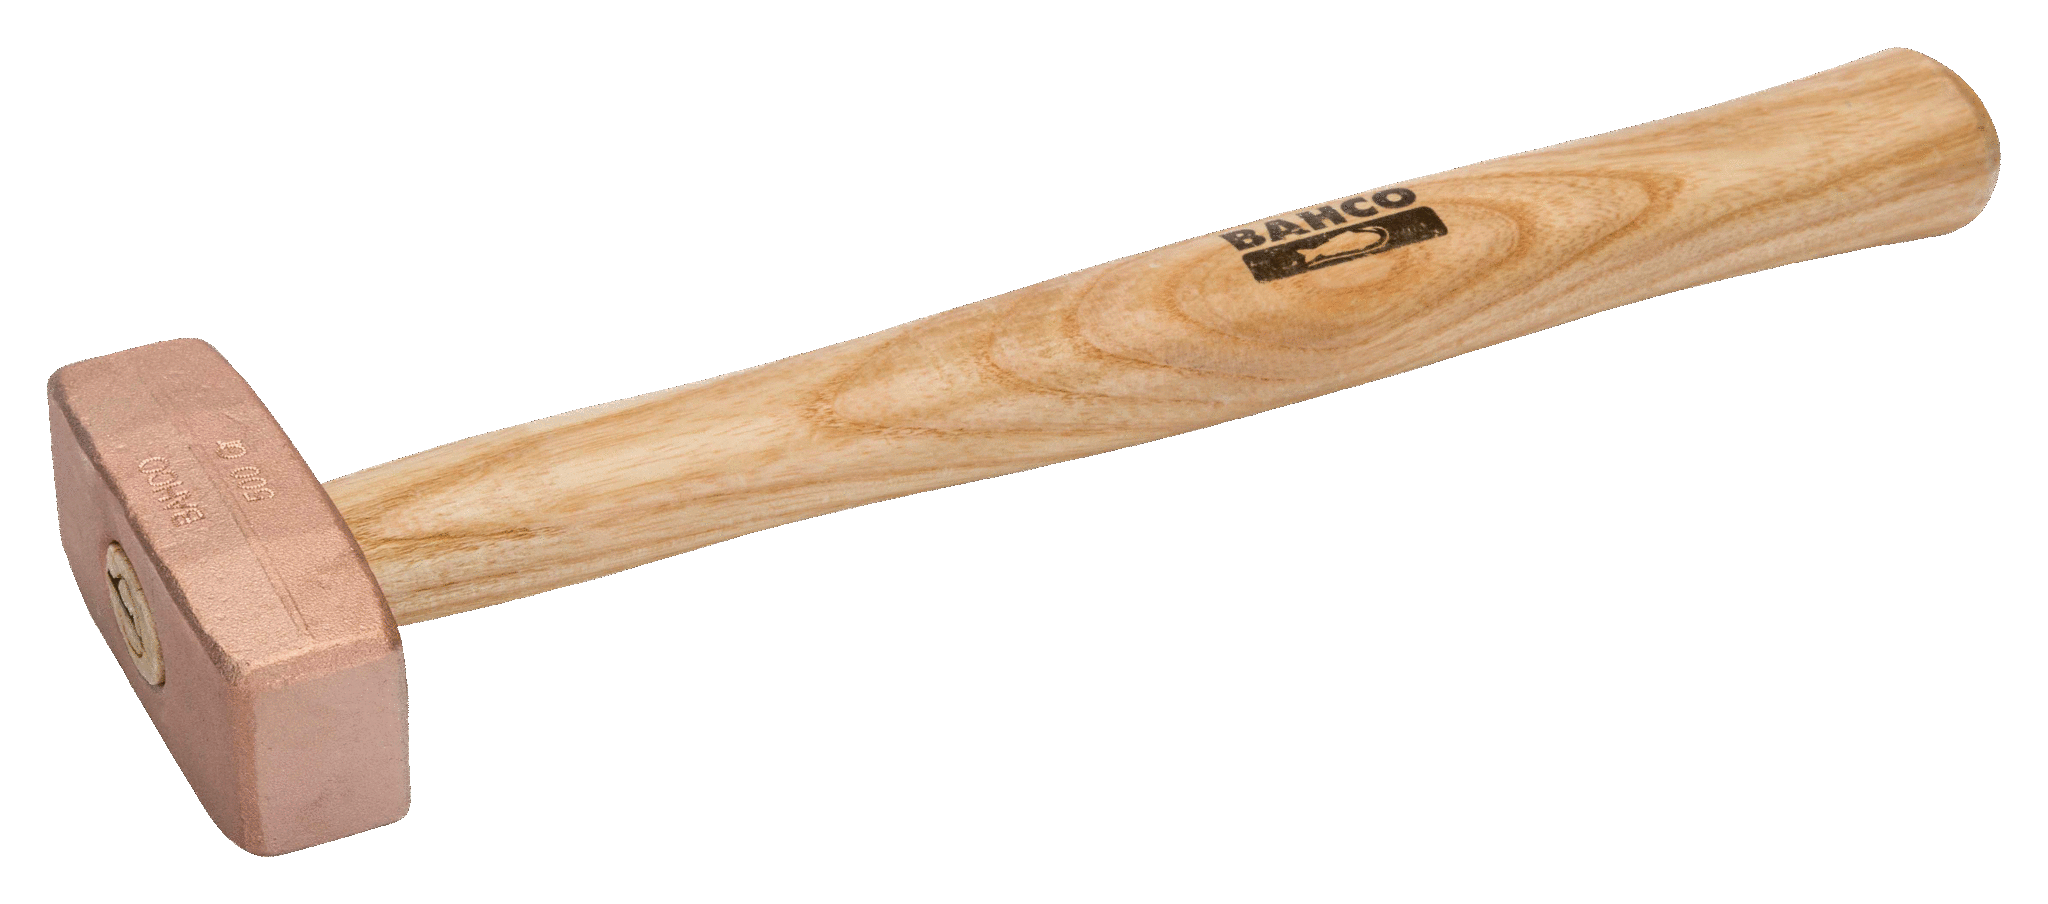 Кувалда с медным бойком, деревянная рукоятка BAHCO 4130